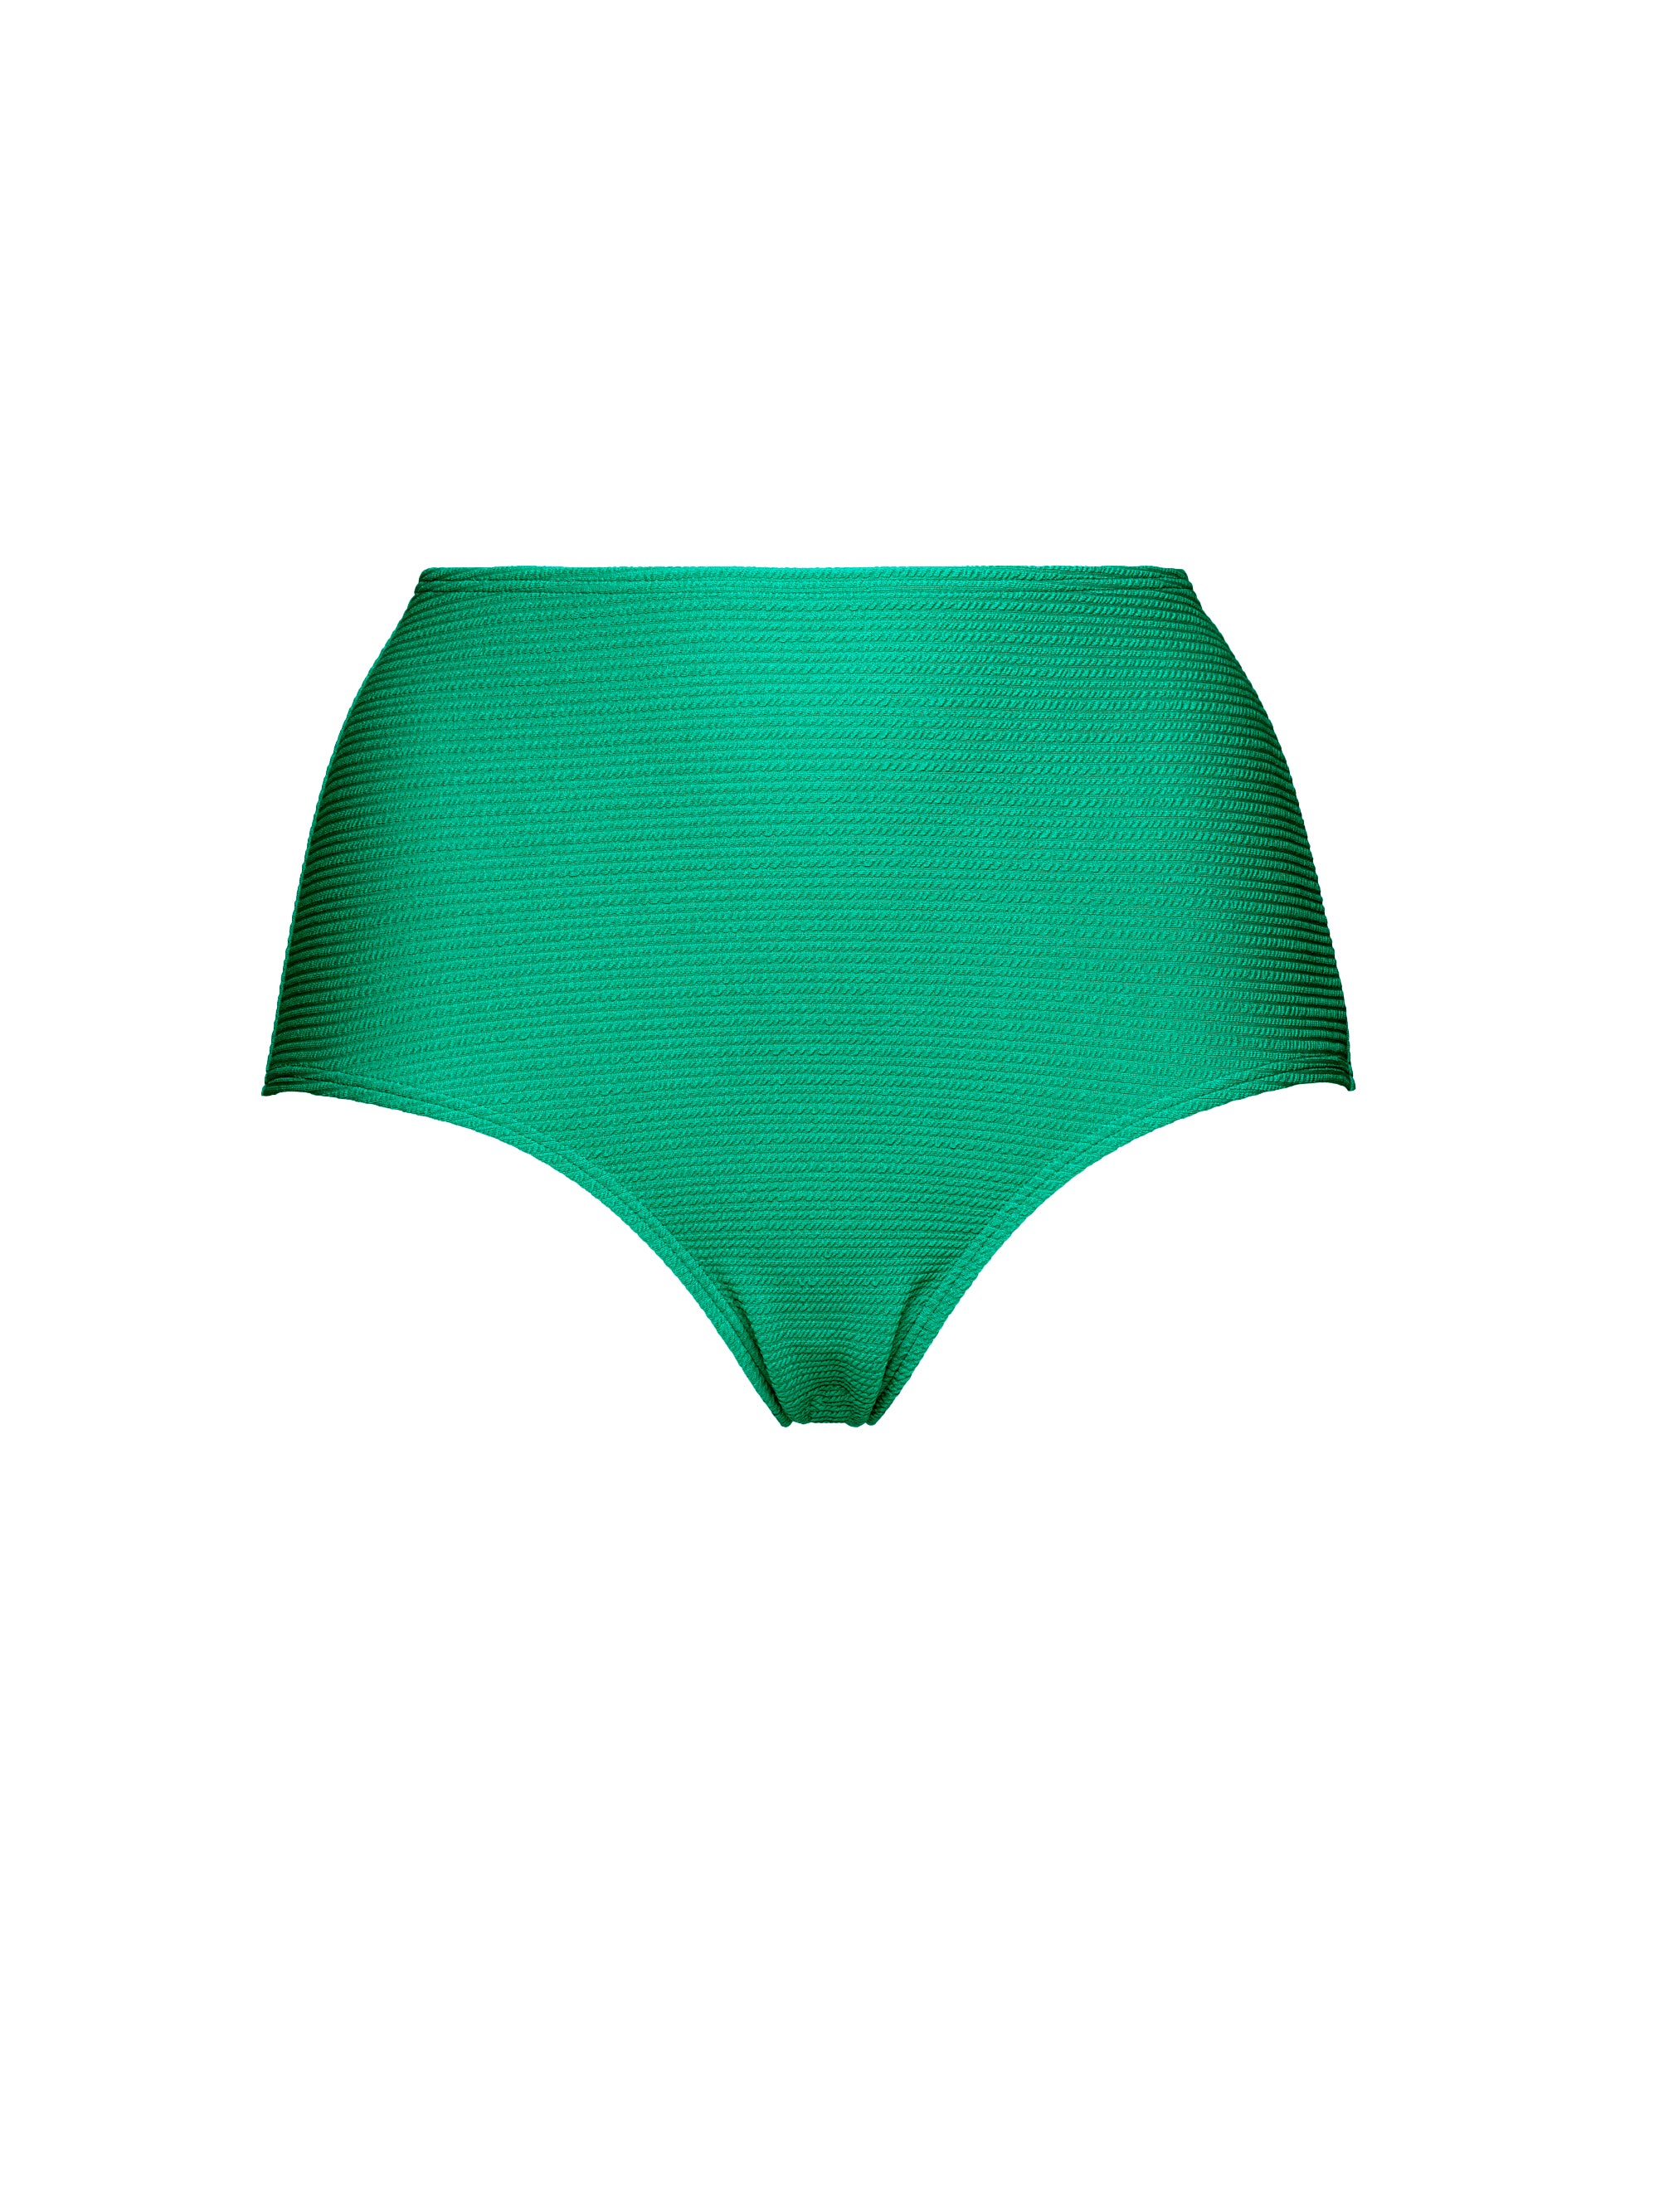 Culotte de bain taille haute Glamourous Textured Vert Tropical